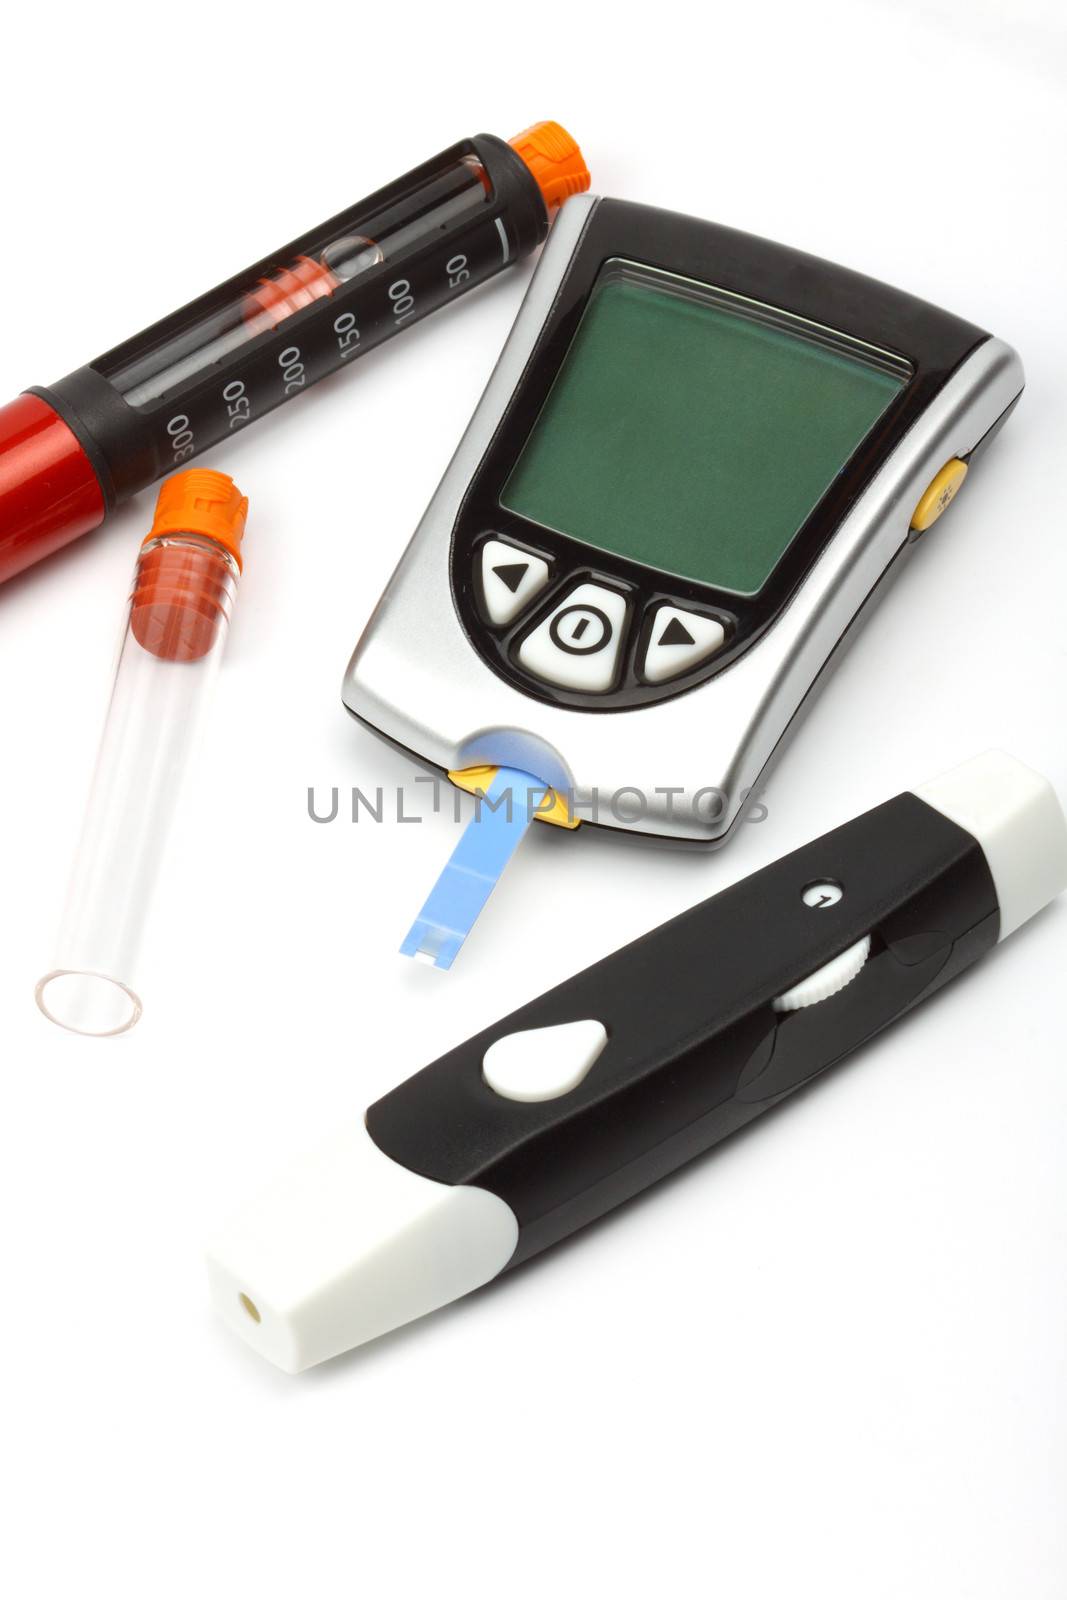 Diabetes equipment by alexkosev